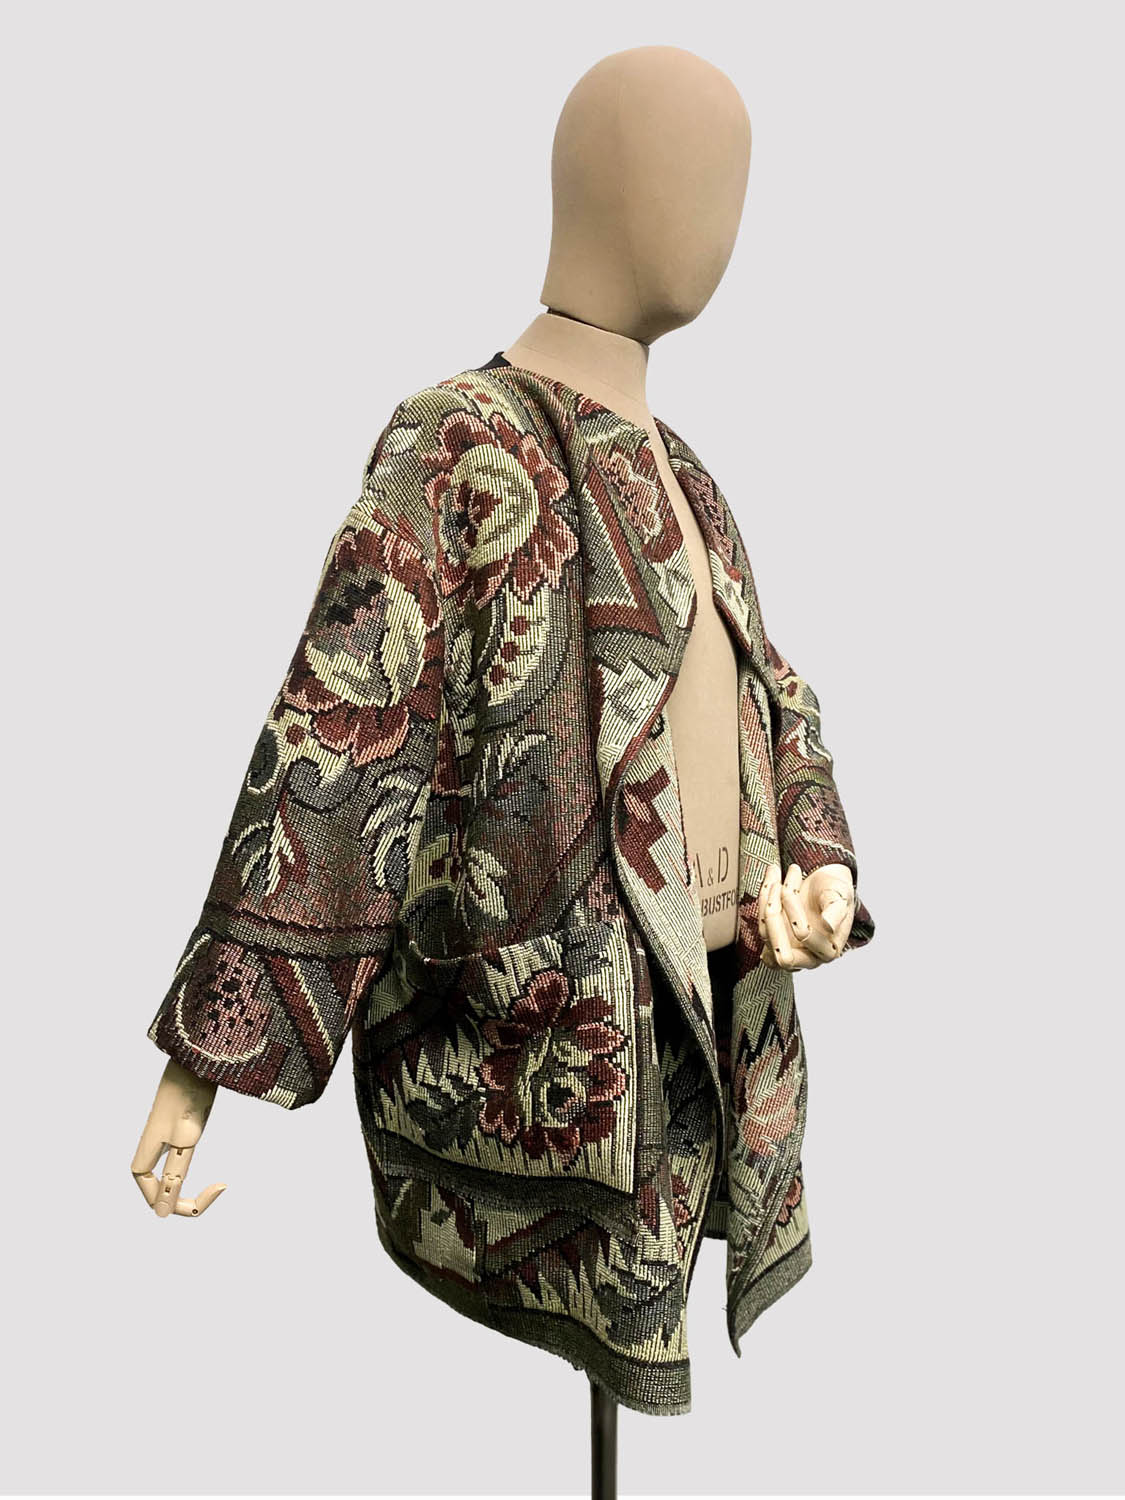 artisanal jkh tapestry jacket